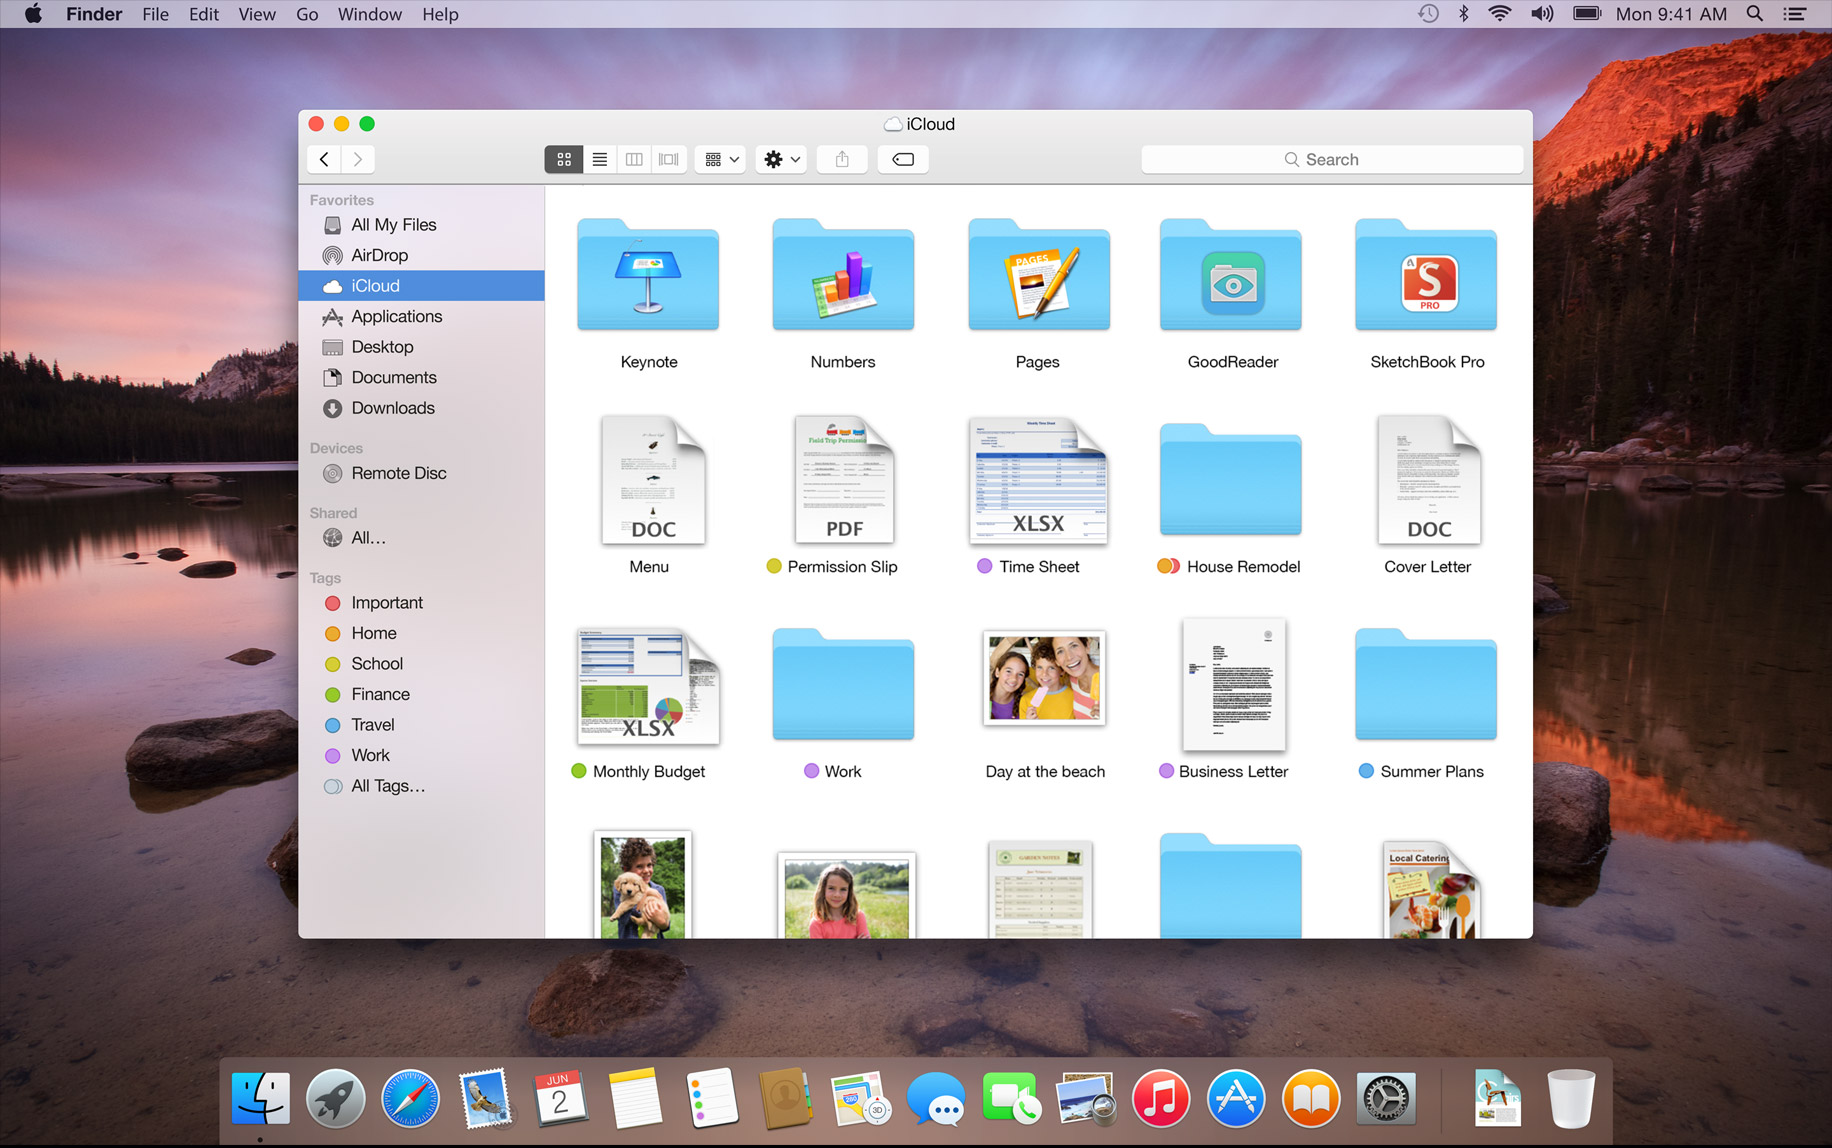 OS X Yosemite public beta 1 on a 2010 Mac Pro with a RAID boot volume